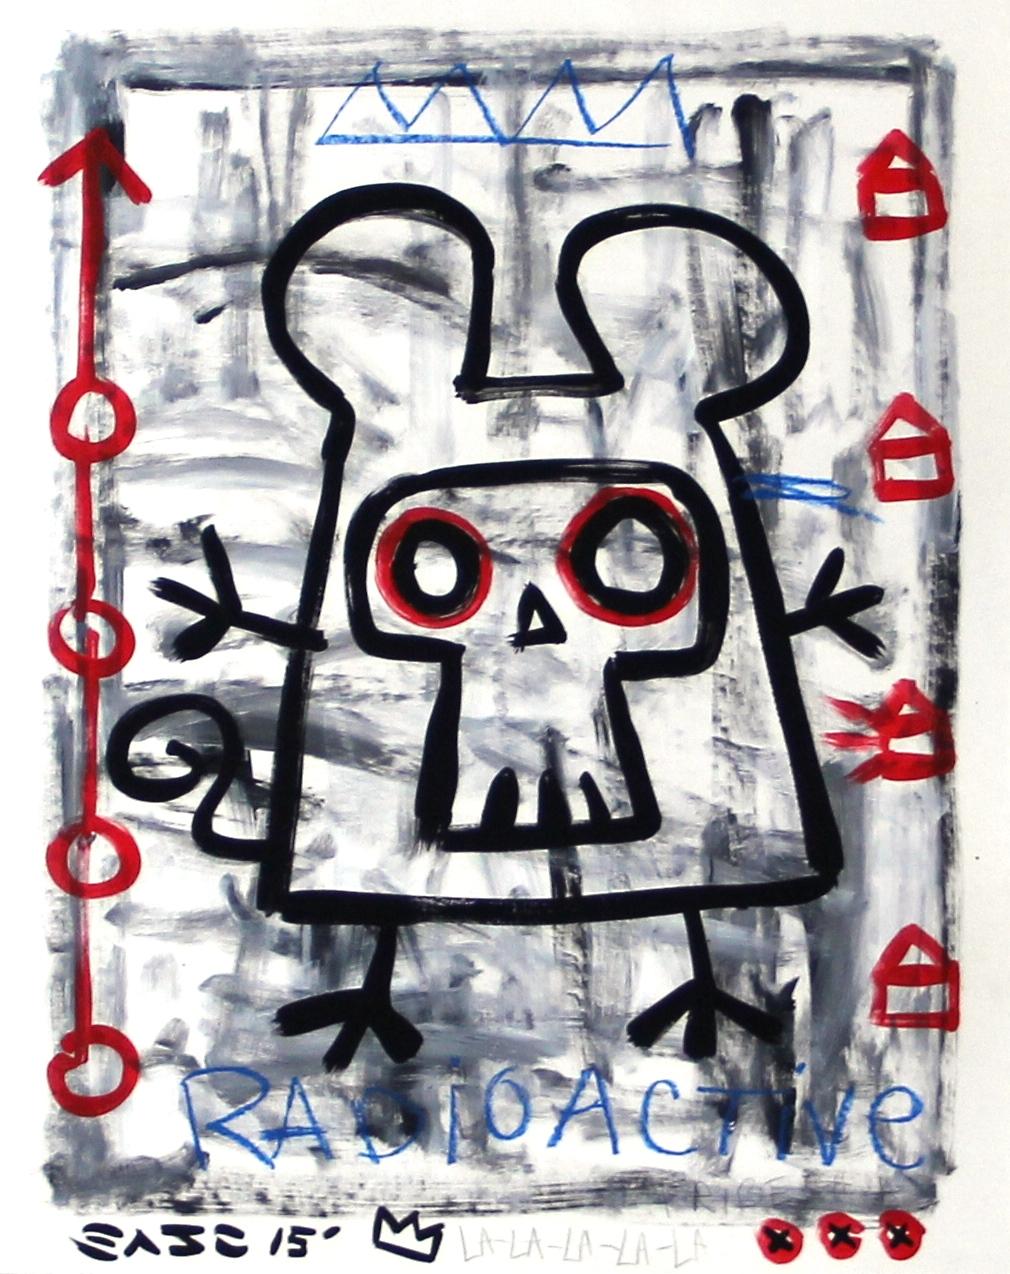 Gary John Figurative Painting - "Radio Active" Original Street Art inspired by Robot and Figures Pop Art